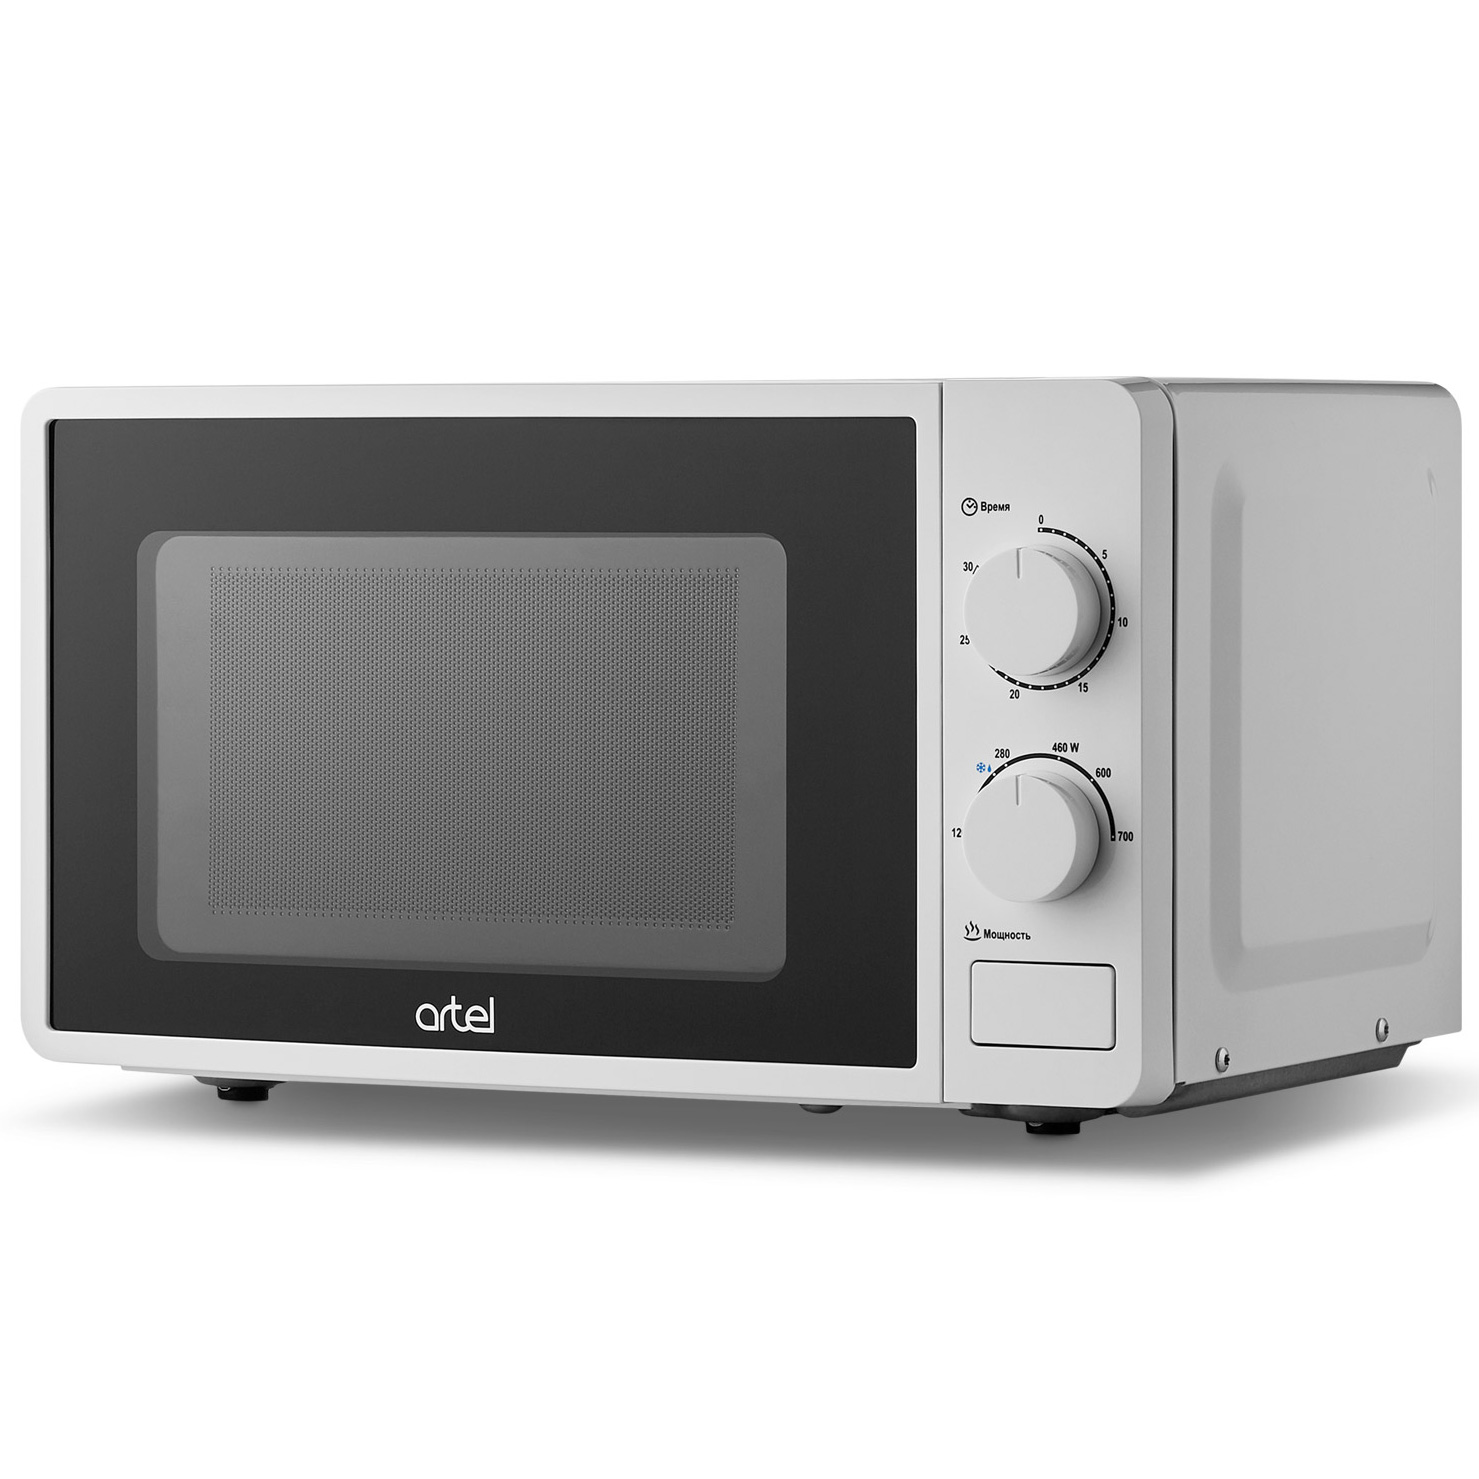 Artel 20MX63 microwave